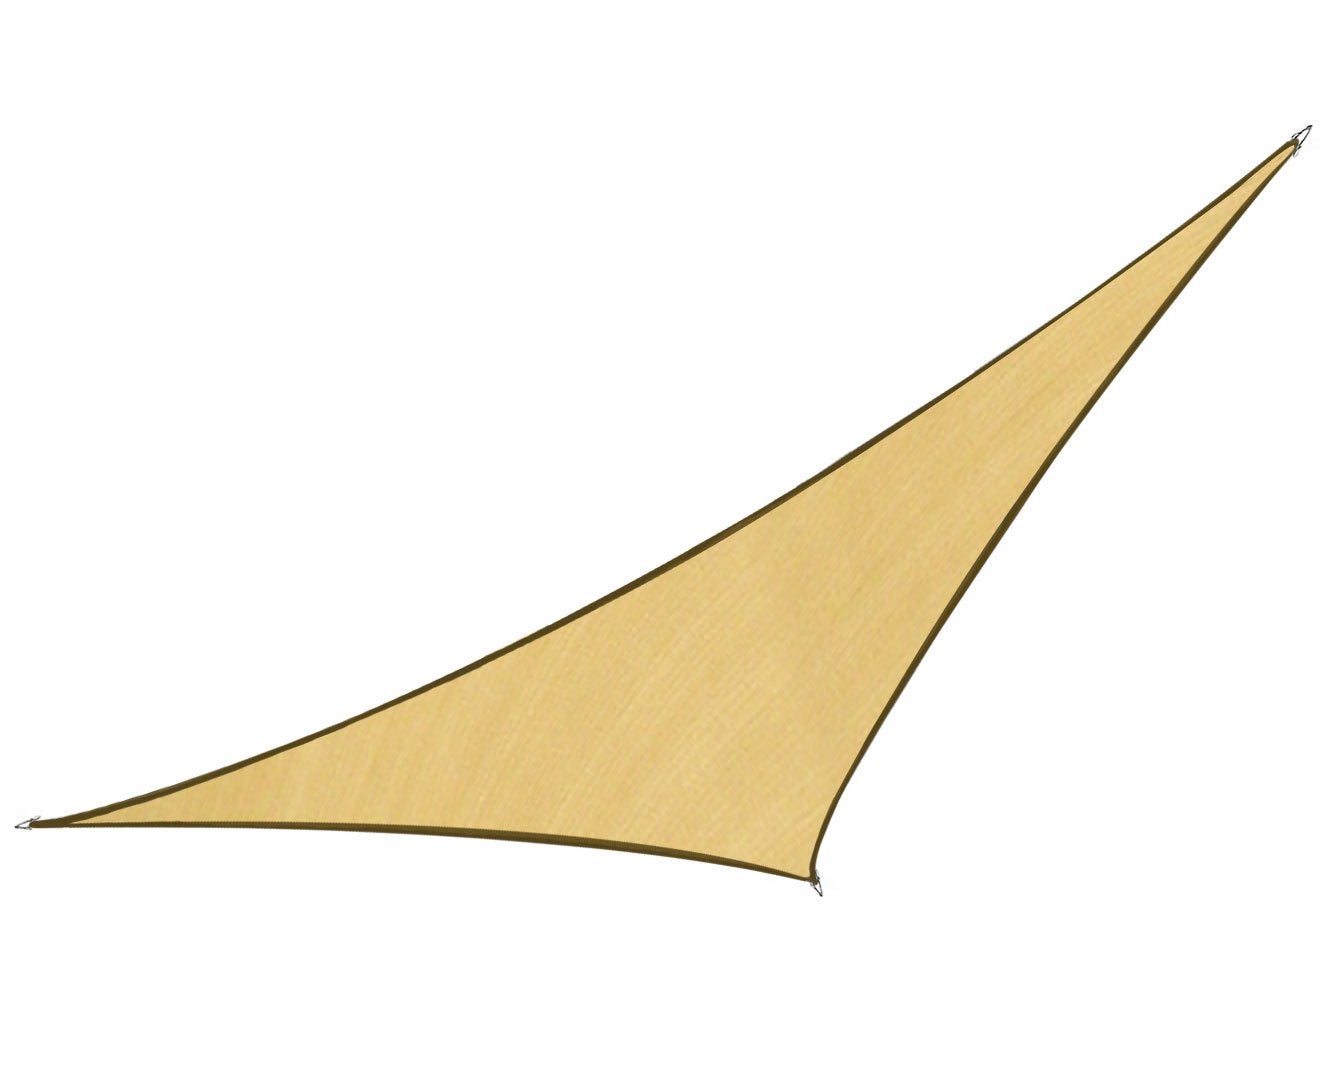 Wallaroo 3.6m X 3.6m X 3.6m Outdoor Sun Shade Sail Canopy - Sand Cloth Triangle